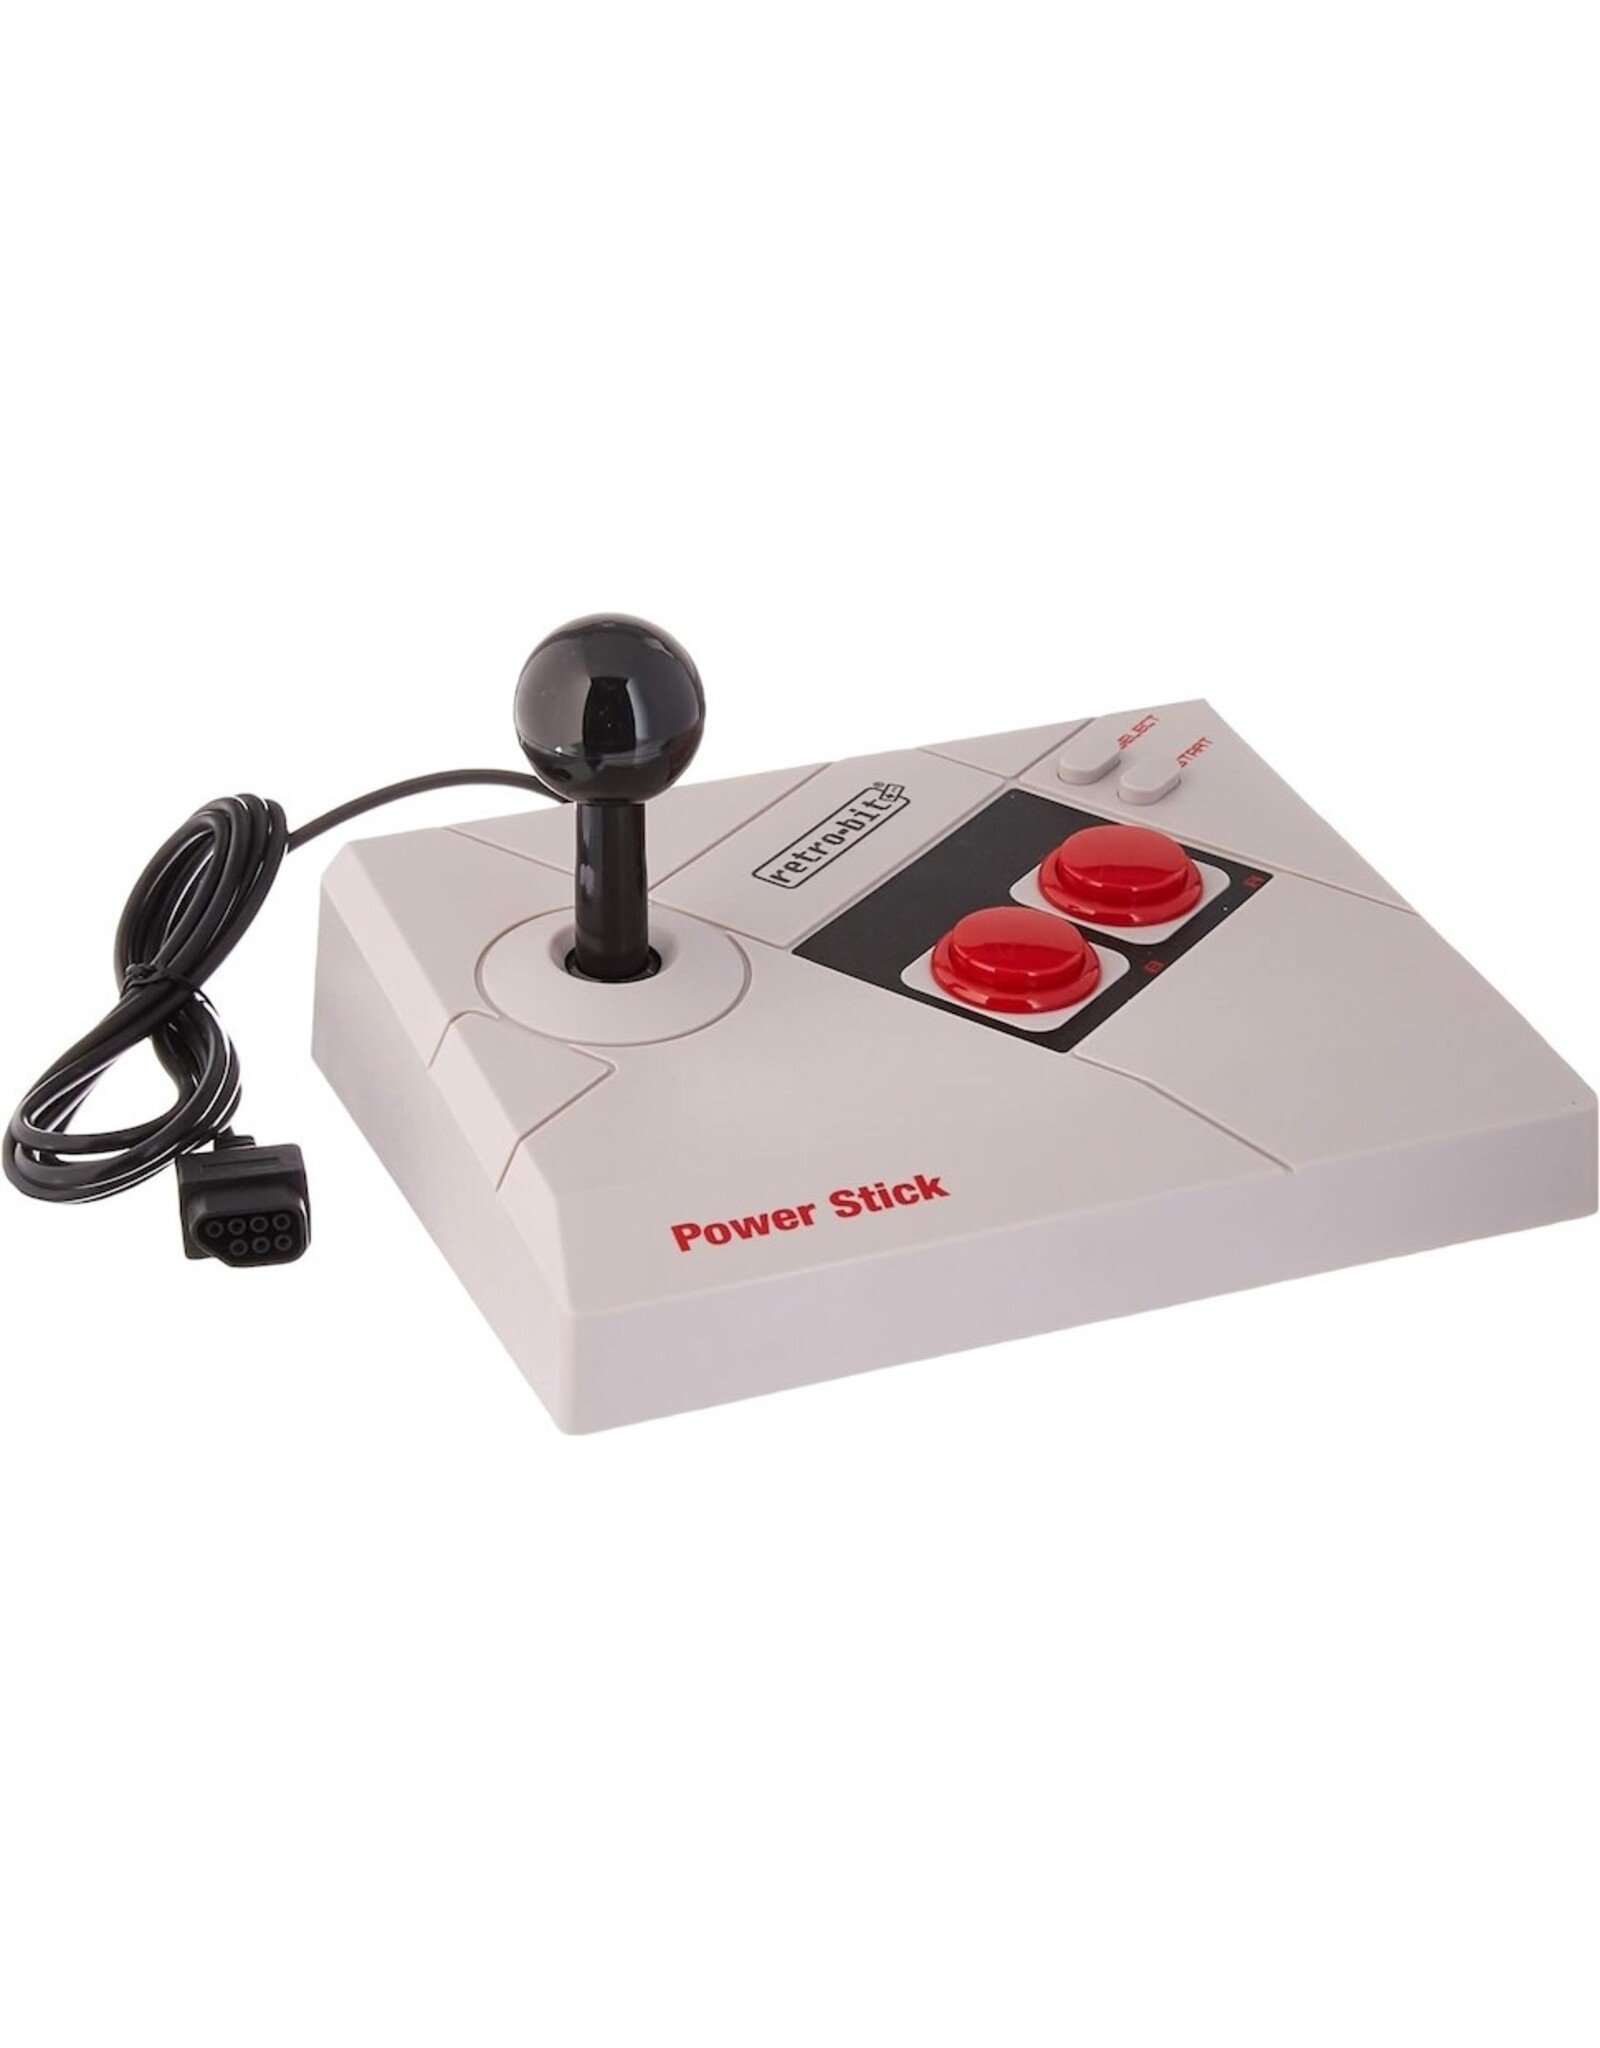 Nintendo Retro-bit Power Stick for NES (Used)